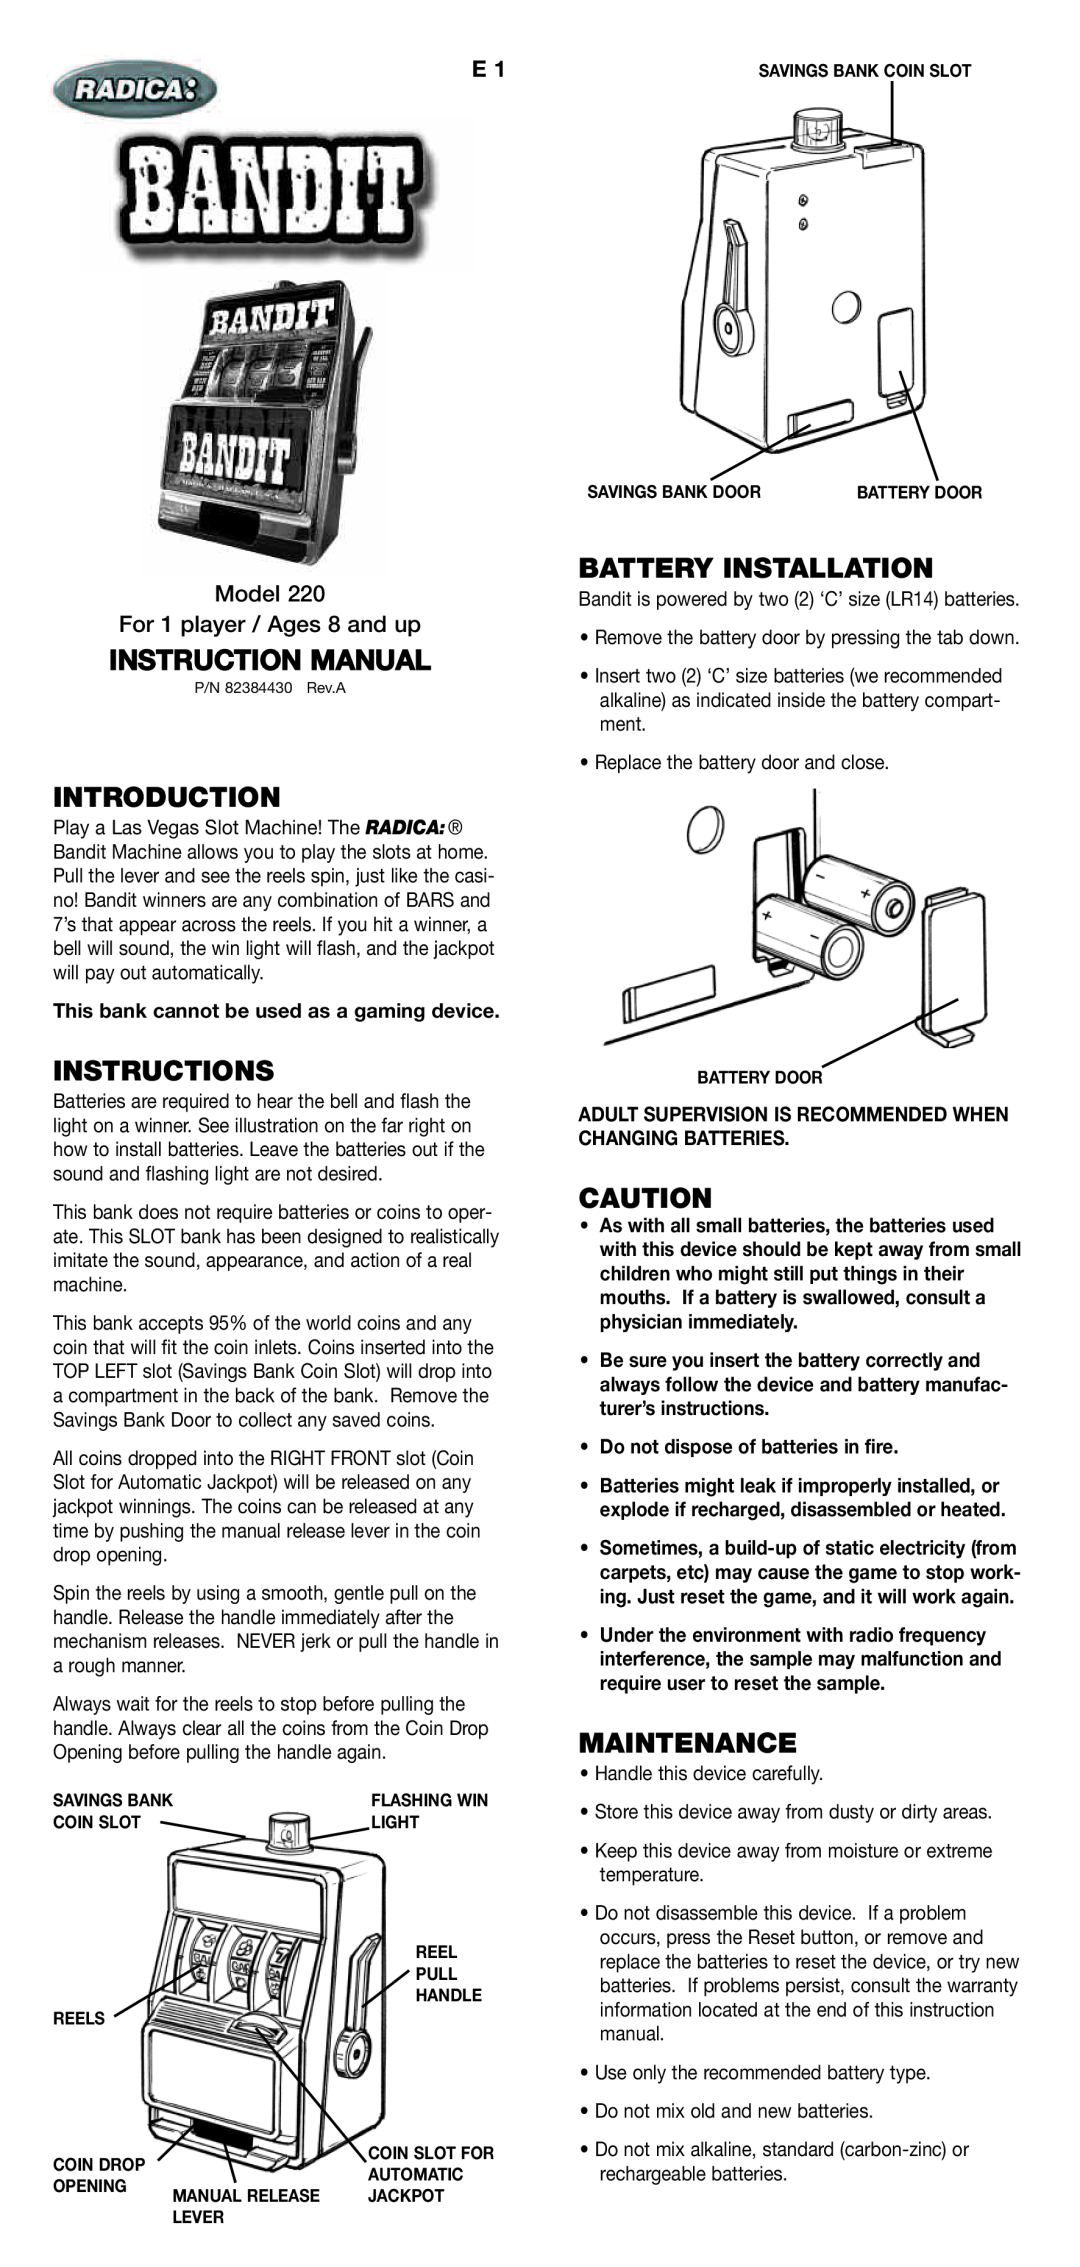 Radica Games 220 warranty Instruction Manual, Introduction, Instructions, Battery Installation, Maintenance 